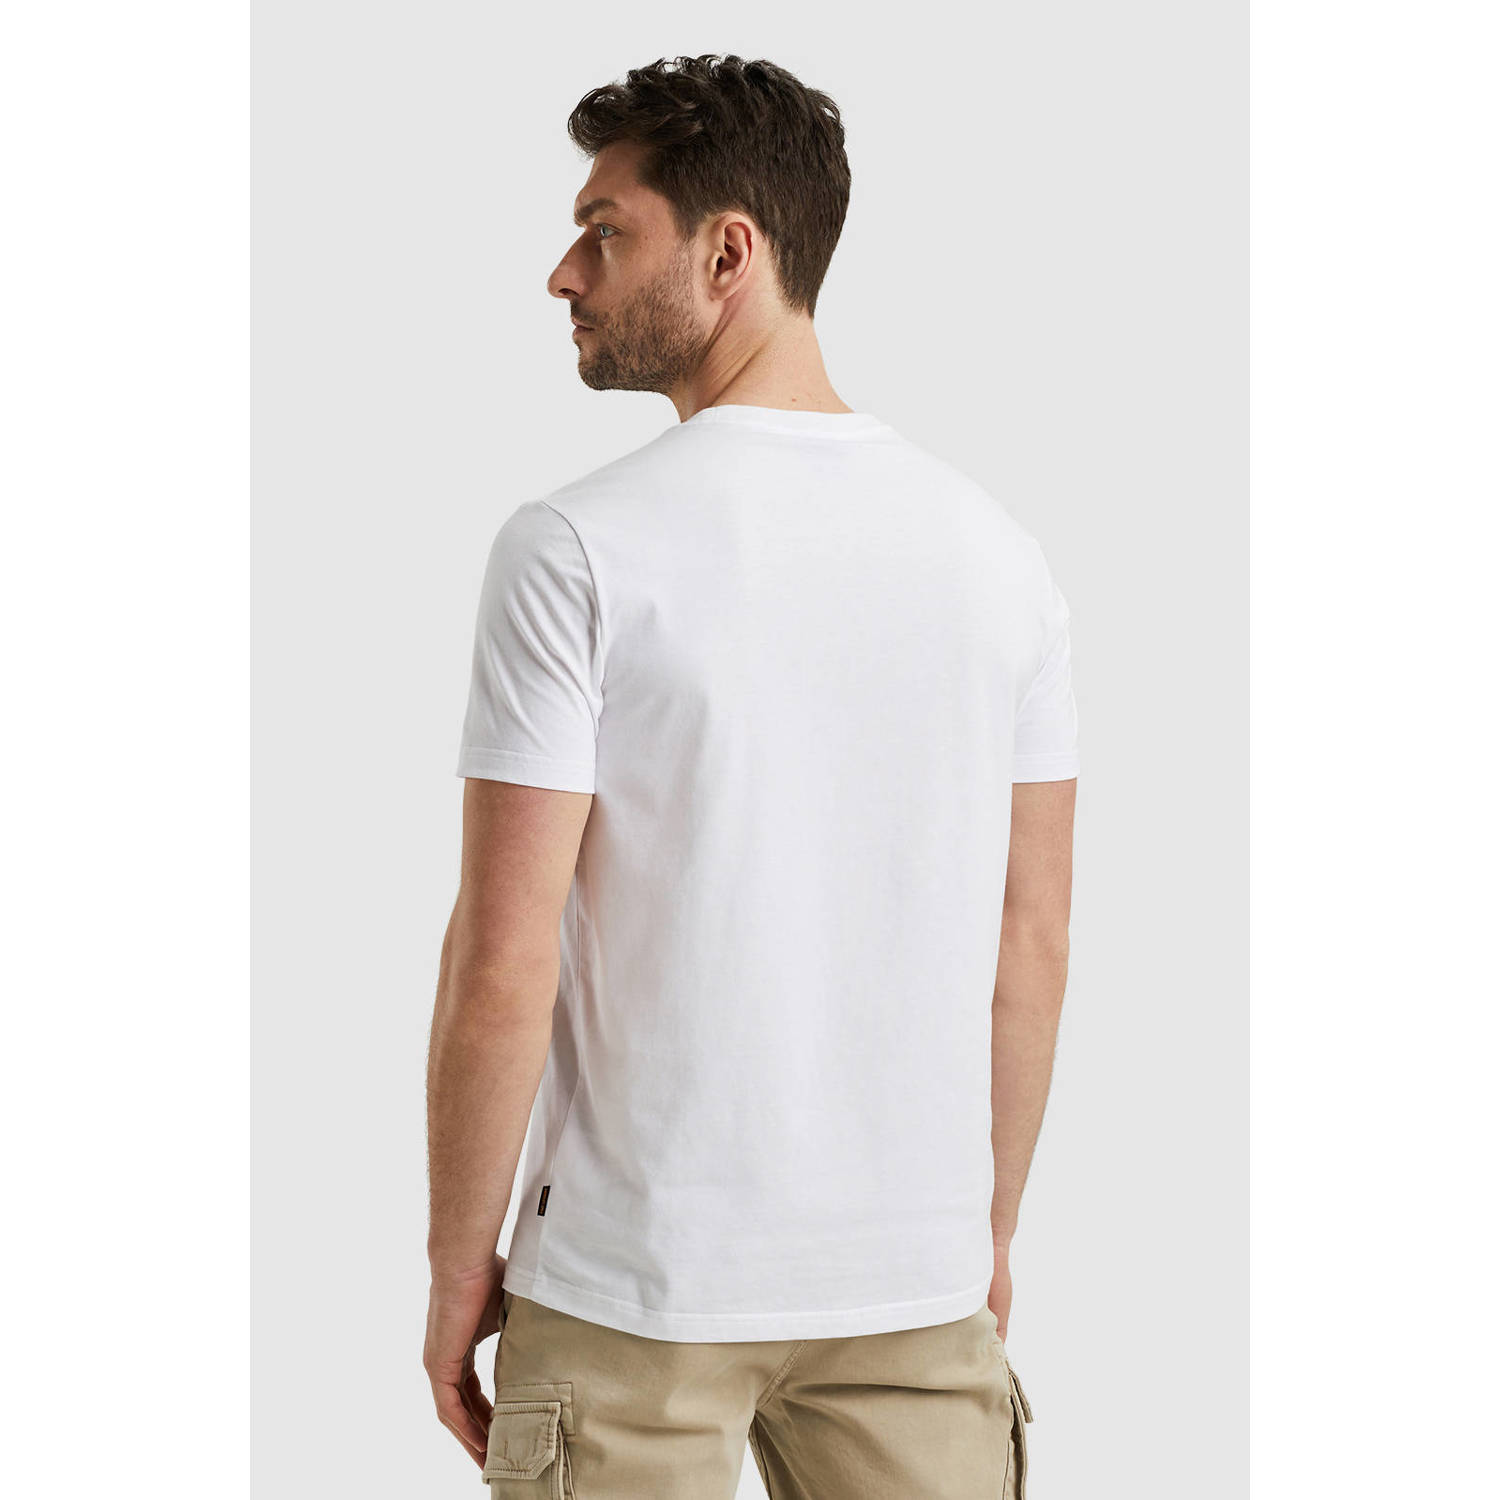 PME Legend T-shirt met printopdruk wit